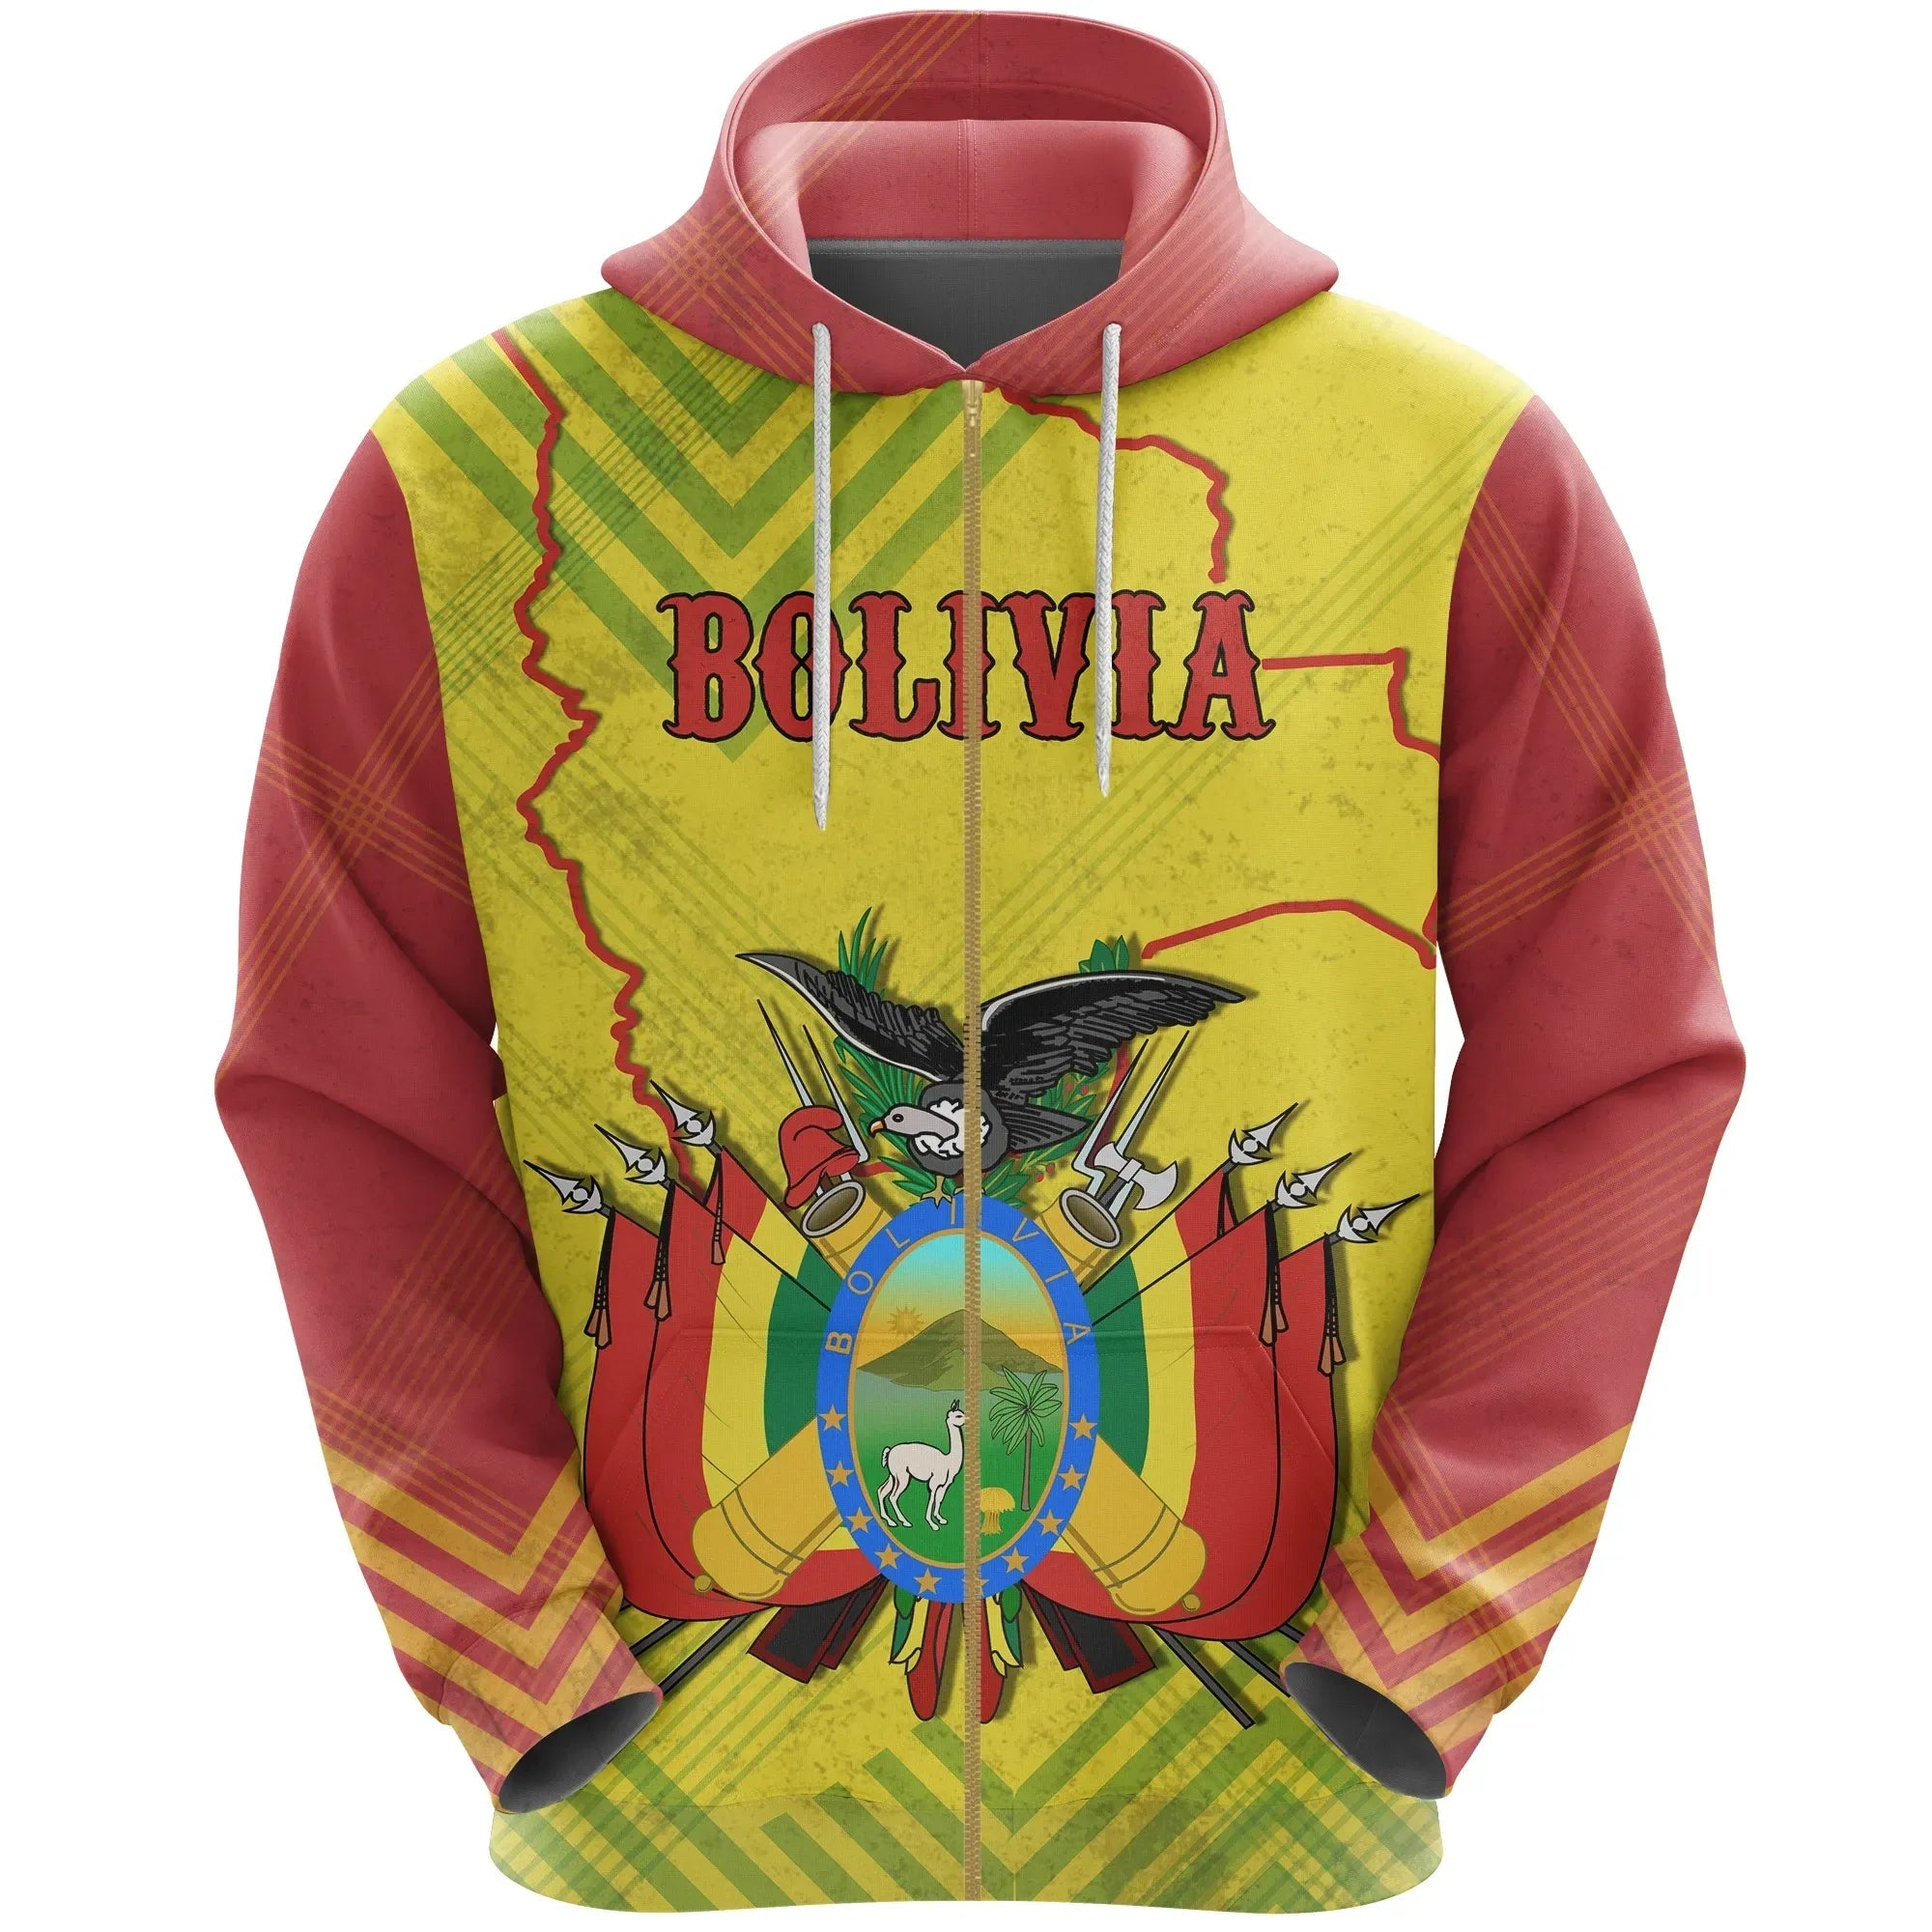 bolivia-zip-hoodie-mix